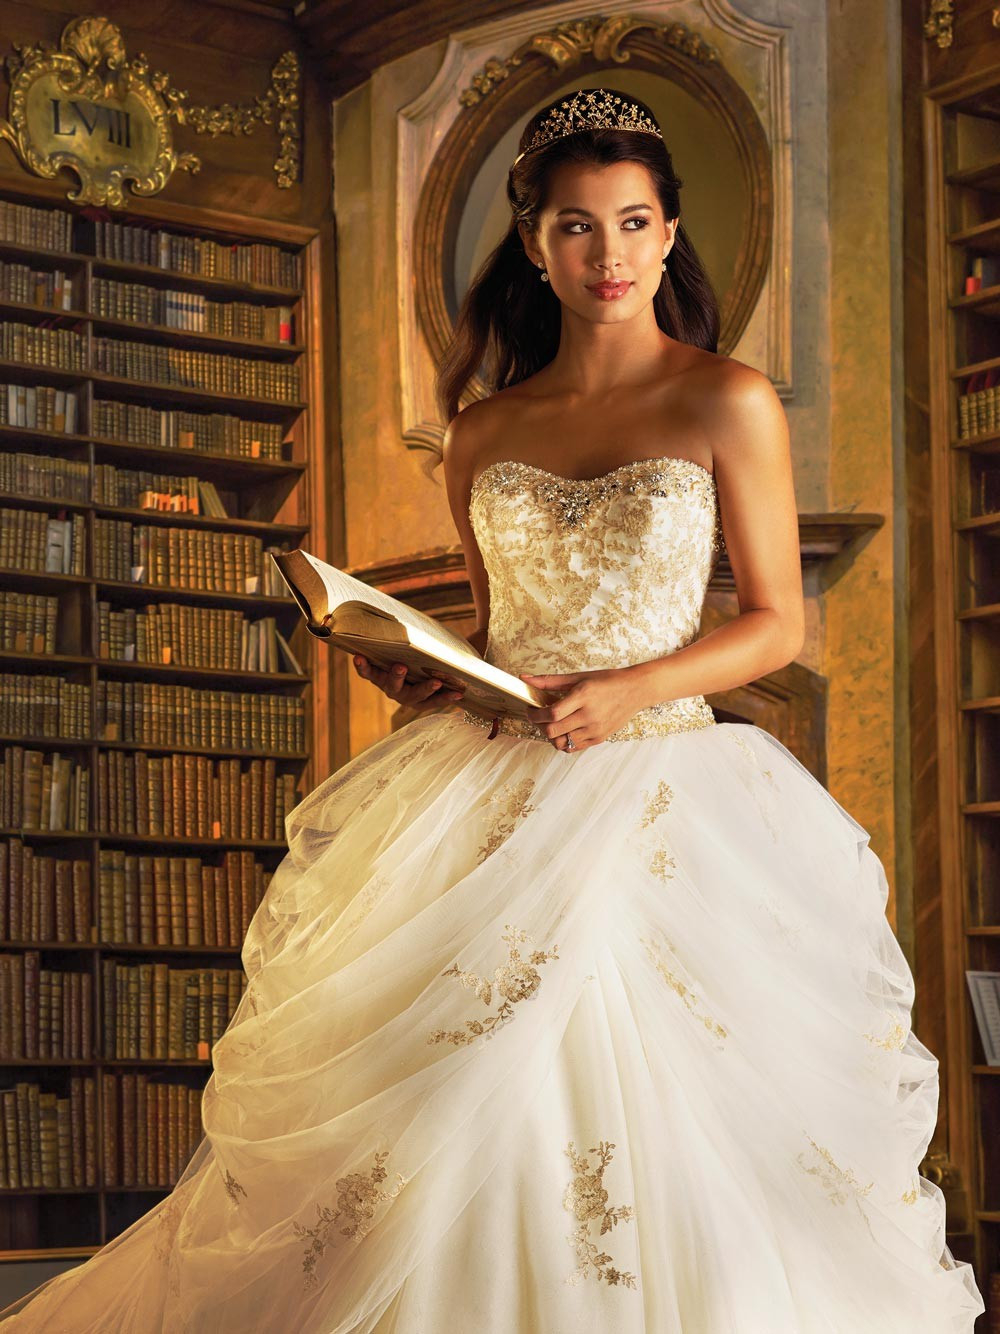 Disney Wedding Gown
 Disney Wedding Dresses for Fairytale Weddings hitched